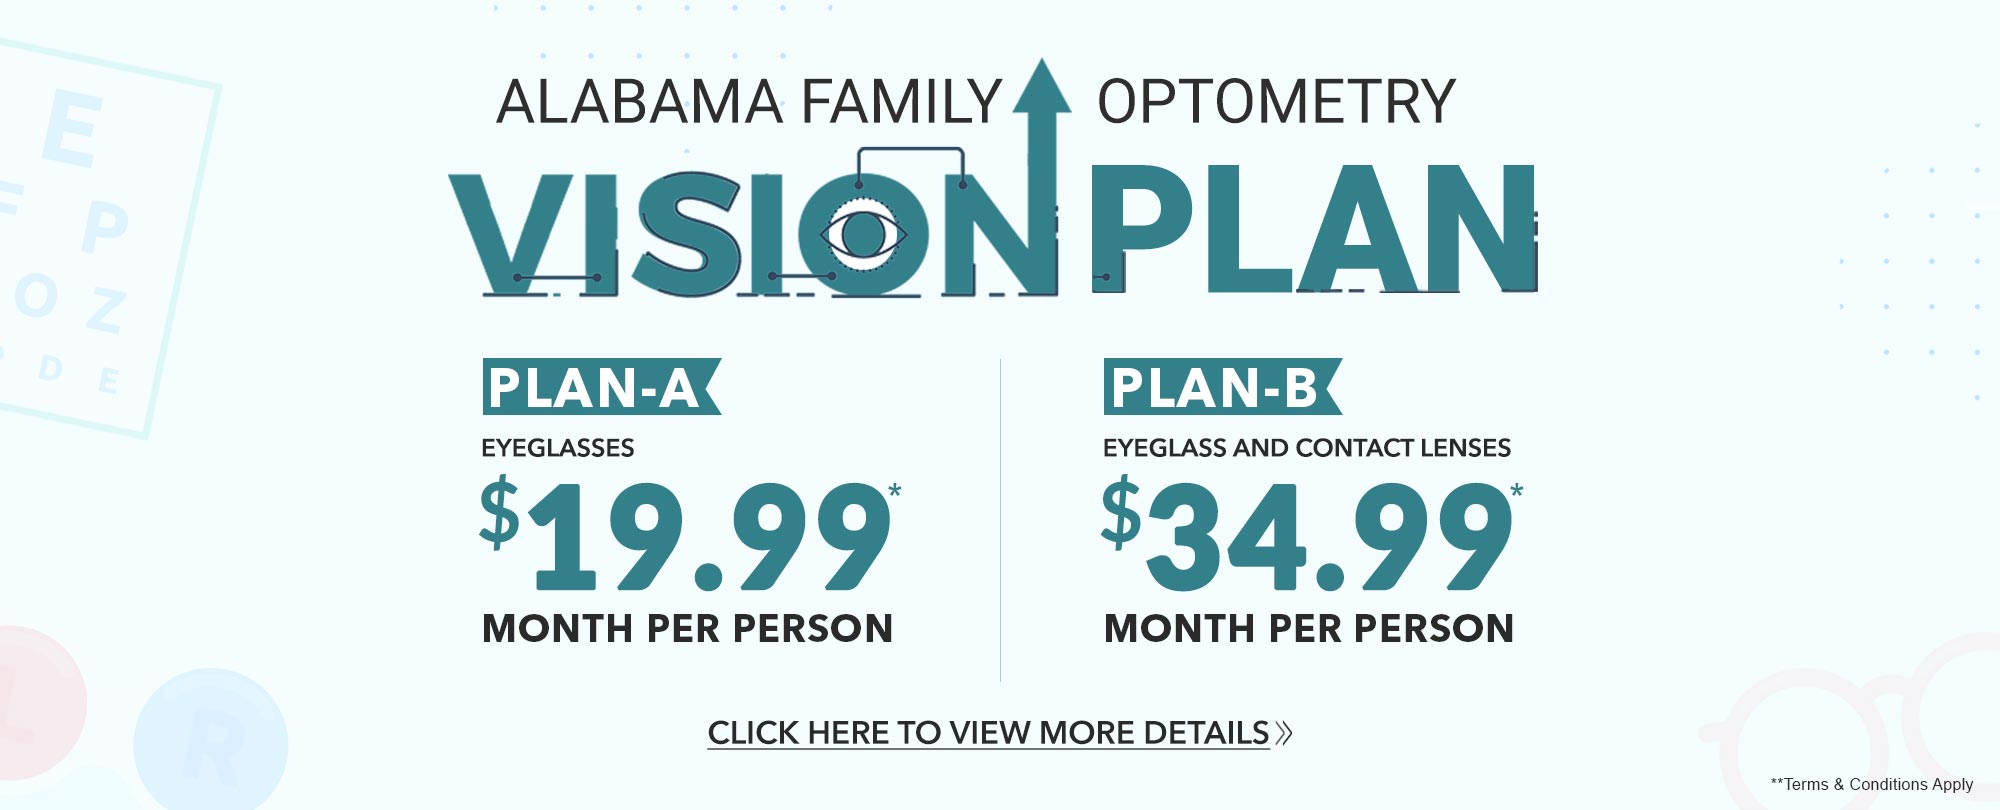 Vision Plans at Alabama Family Optometry